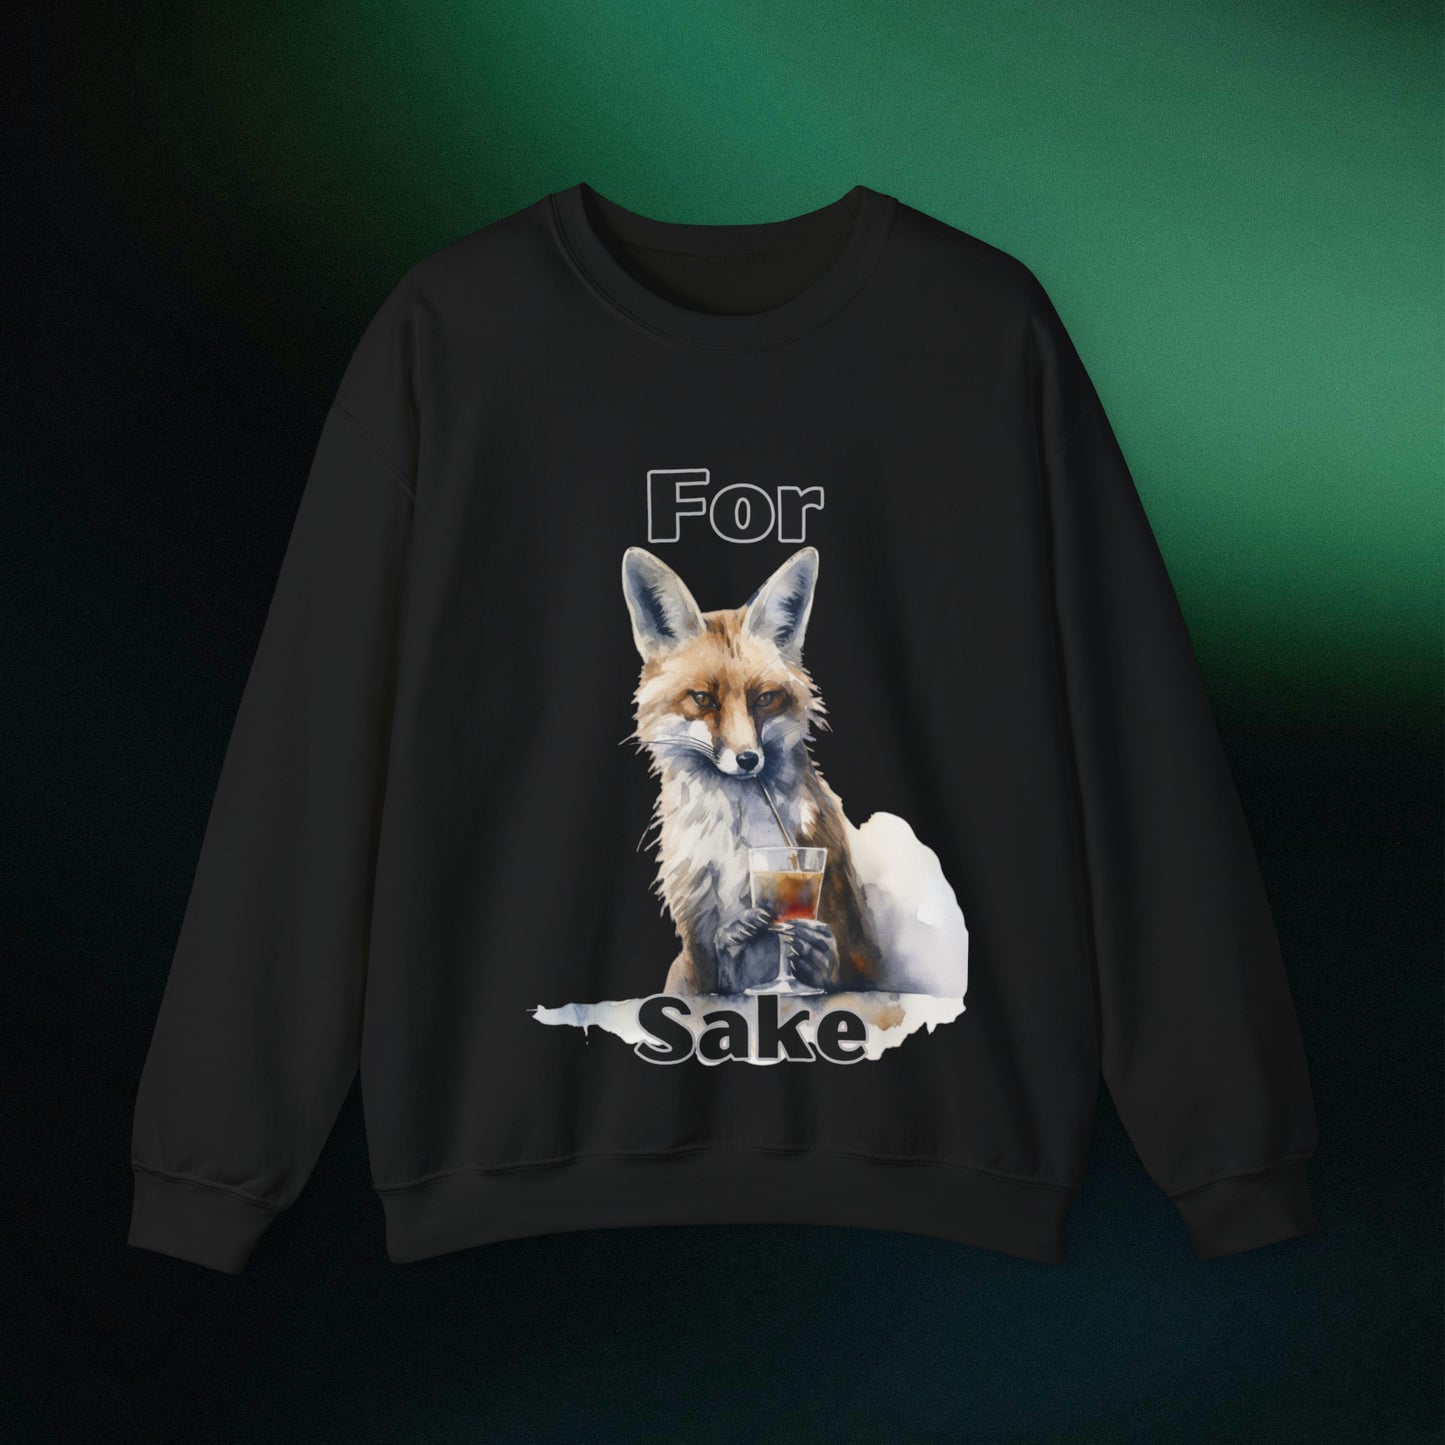 For Fox Sake: Funny Fox Sweatshirt | Gift for Fox Lover | Animal Lover Shirt - Cute Fox Gift for Nature Enthusiasts Sweatshirt S Black 